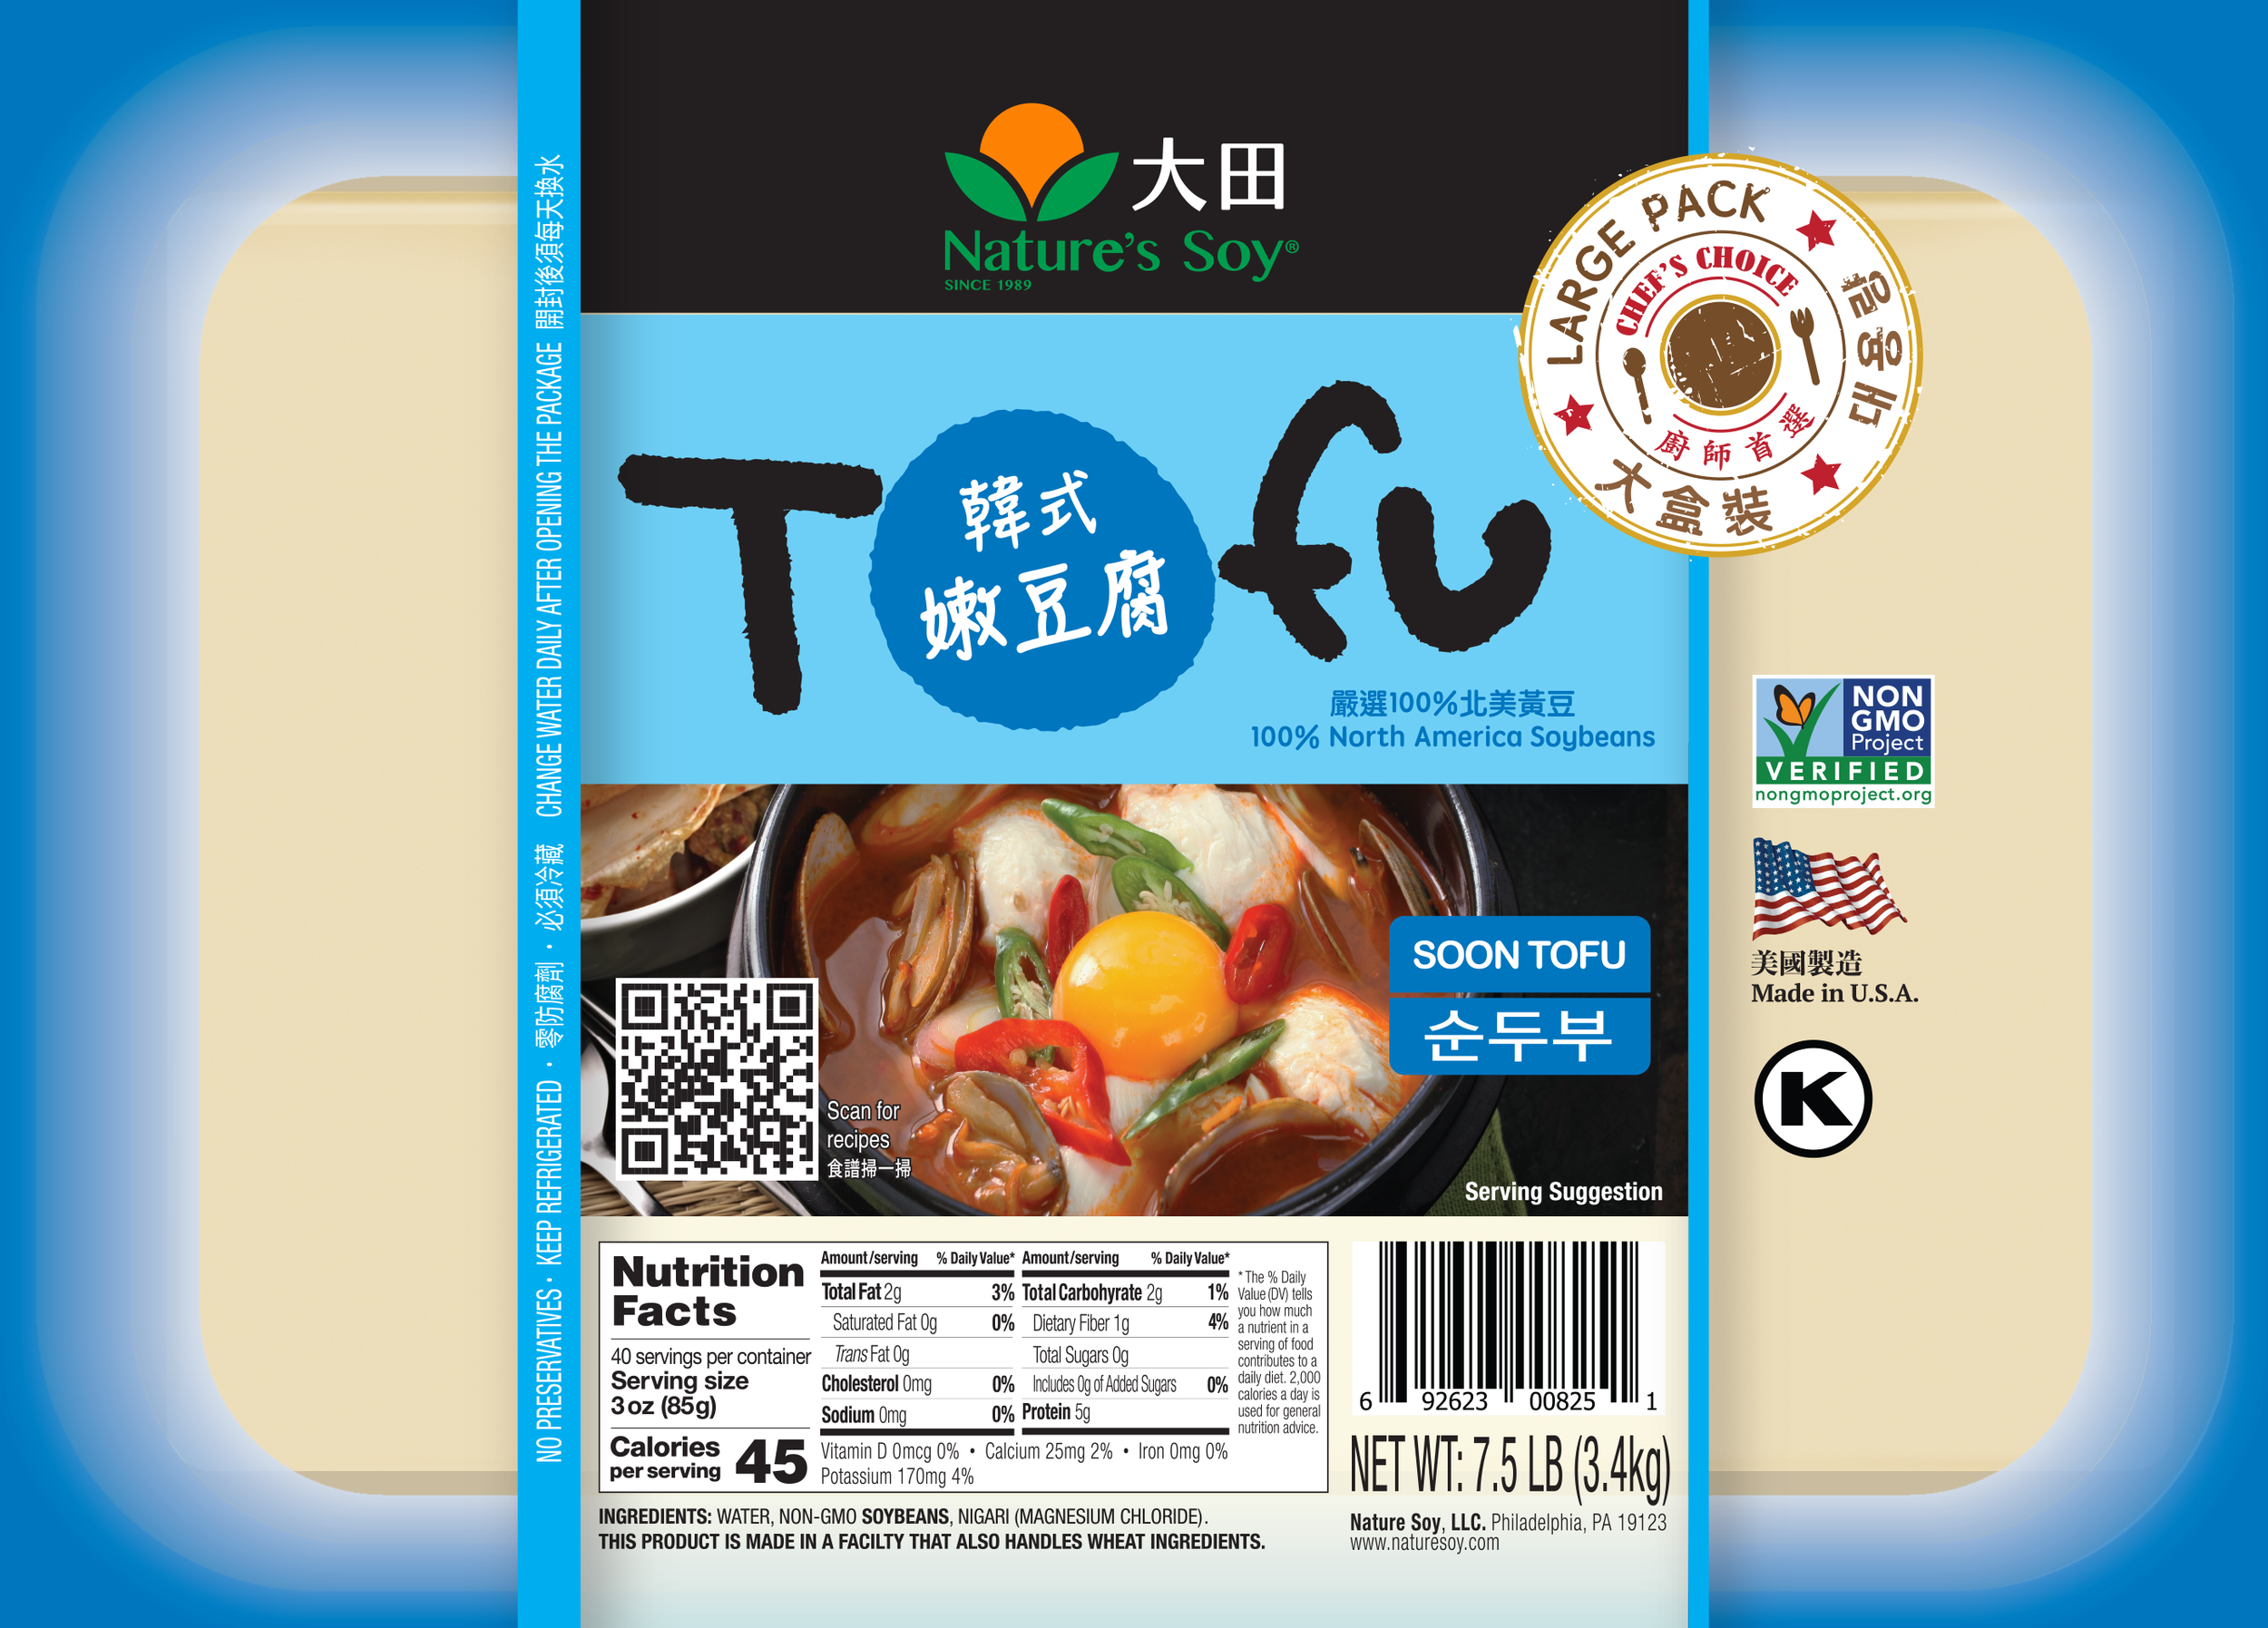 Large Soft Tofu